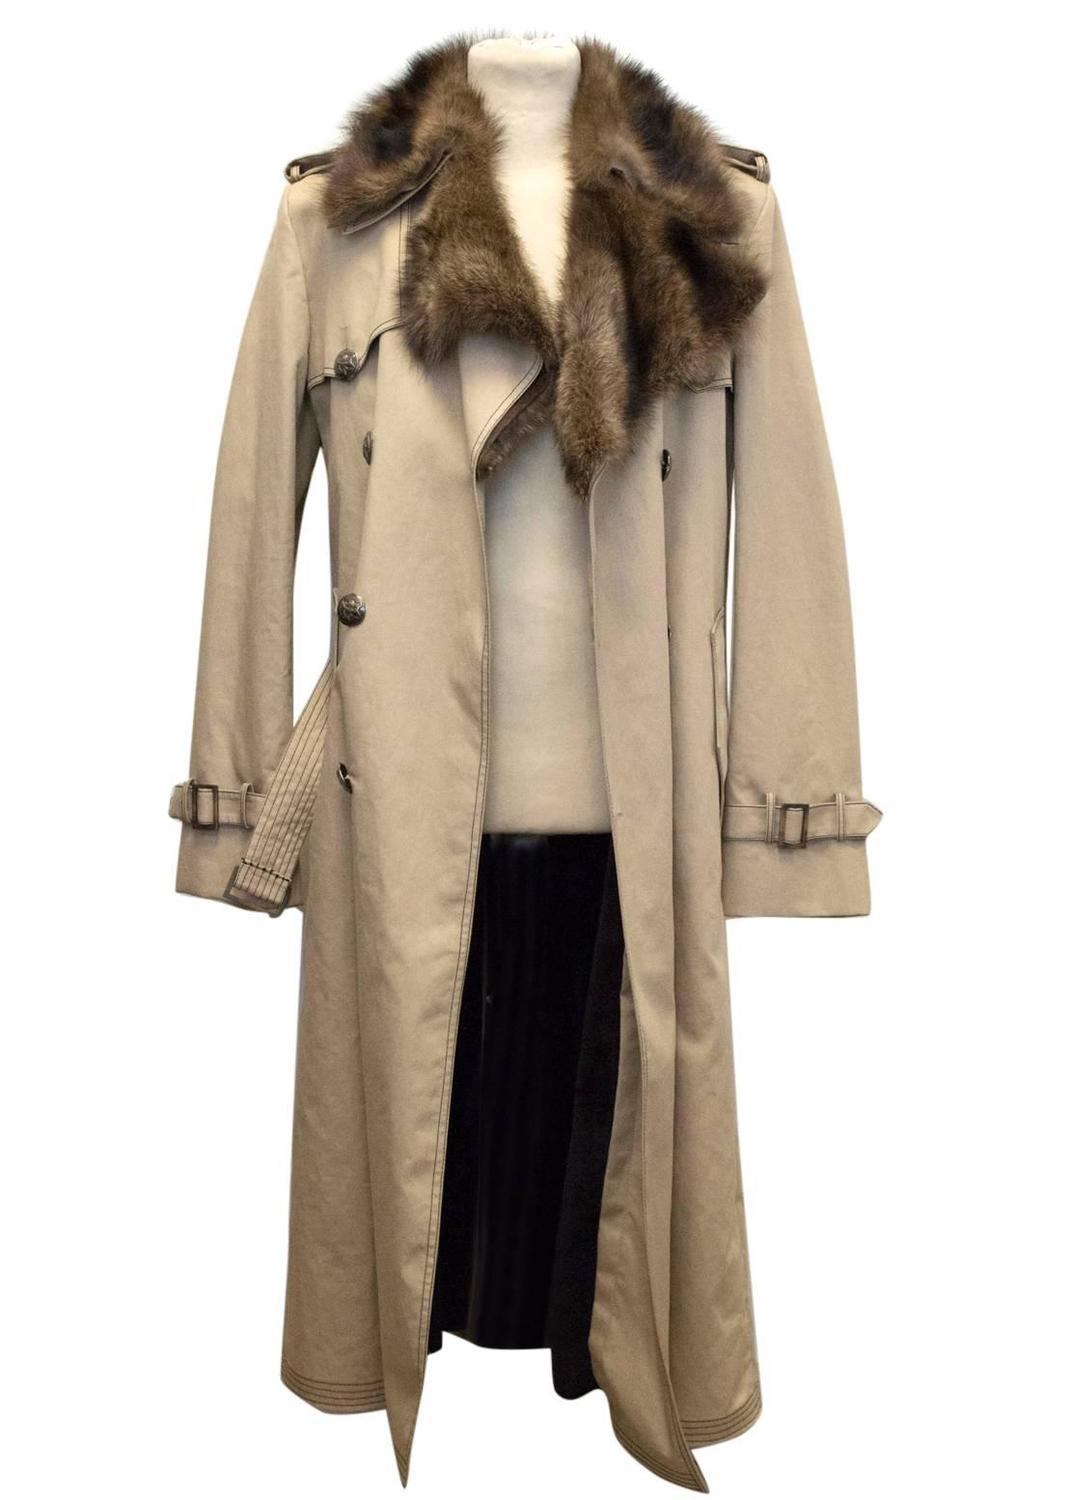 Fendi Men's detachable fur lined trench coat For Sale at 1stdibs